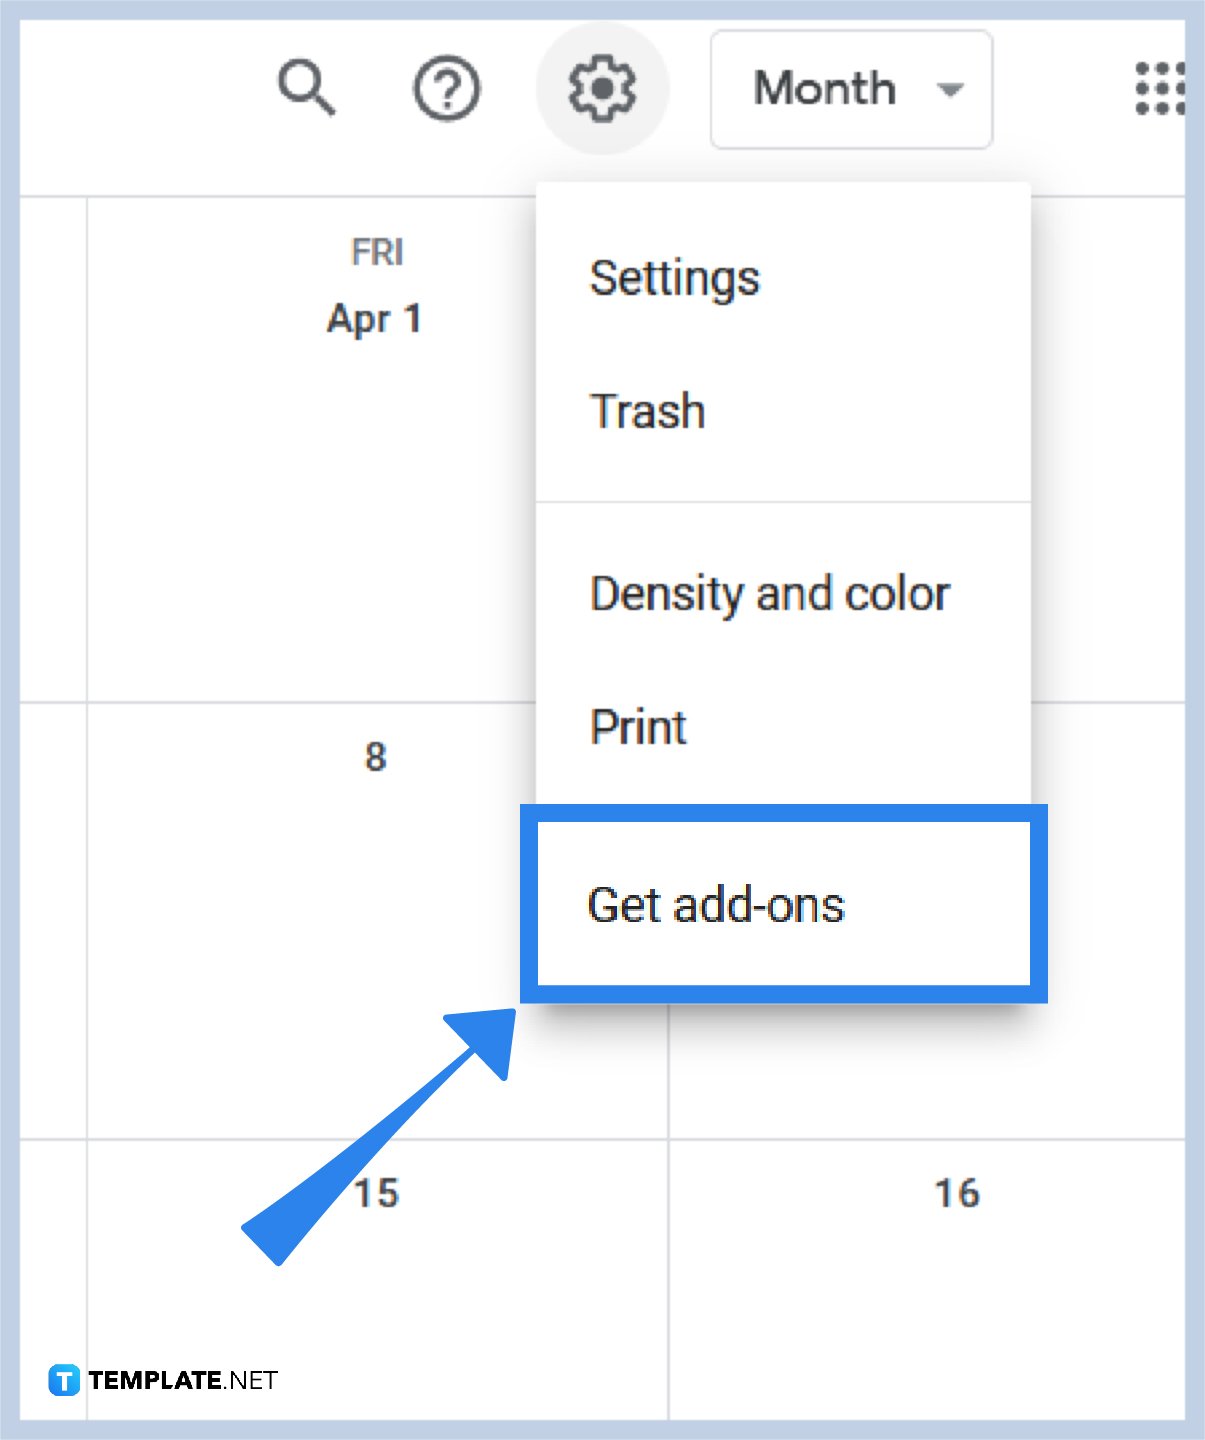 How to Send a Google Calendar Invite with Zoom